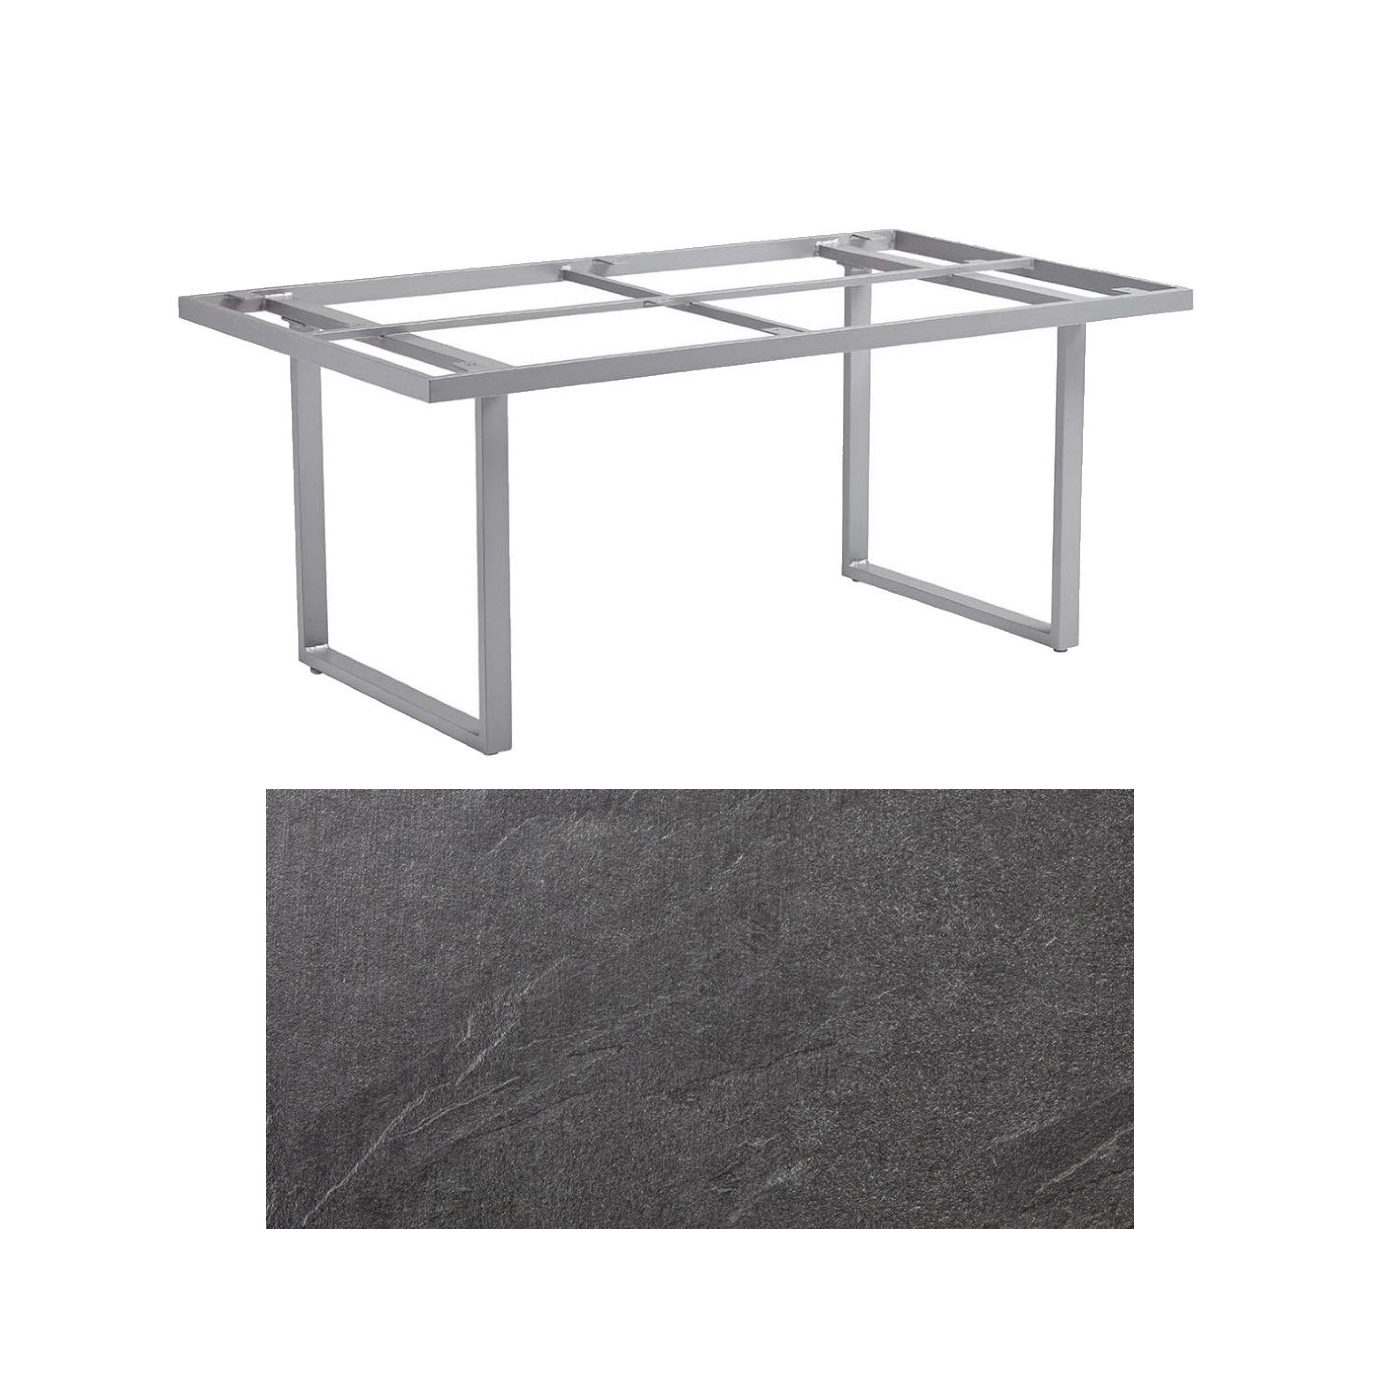 Kettler "Skate" Gartentisch Casual Dining, Gestell Aluminium silber, Tischplatte HPL Jura anthrazit, 160x95 cm, Höhe ca. 68 cm